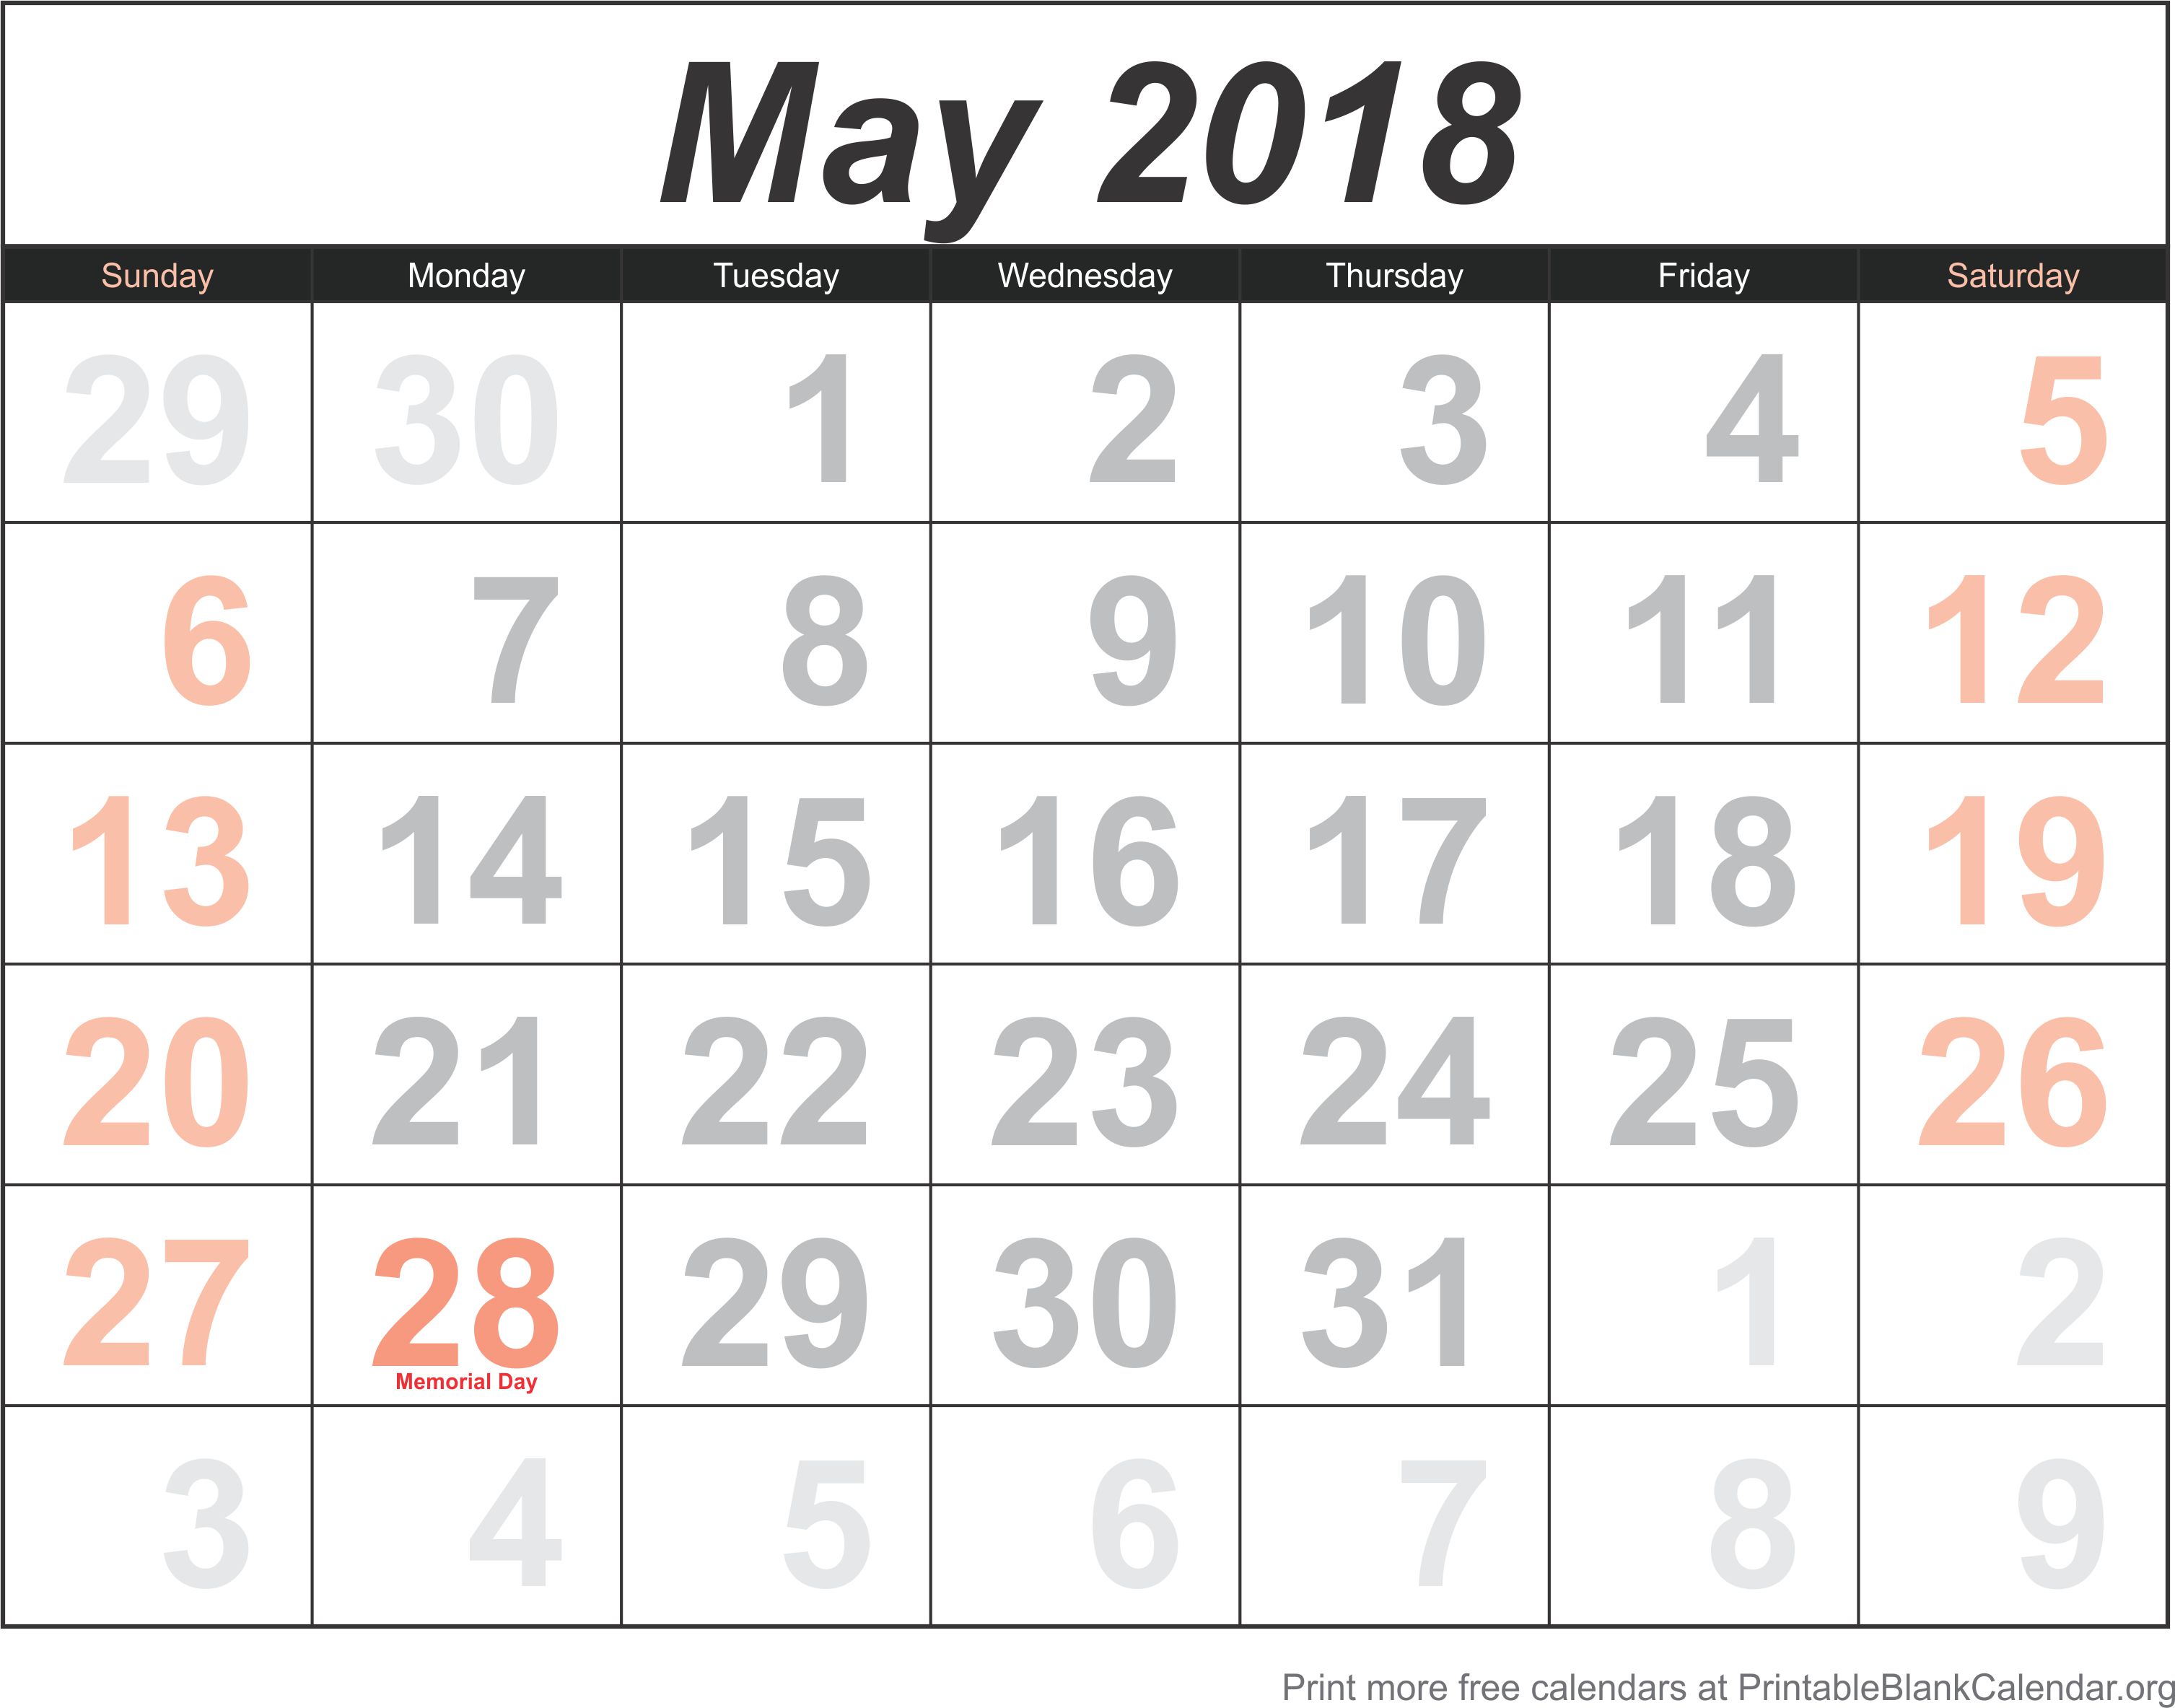 free-calendar-may-2018-printable-blank-calendar